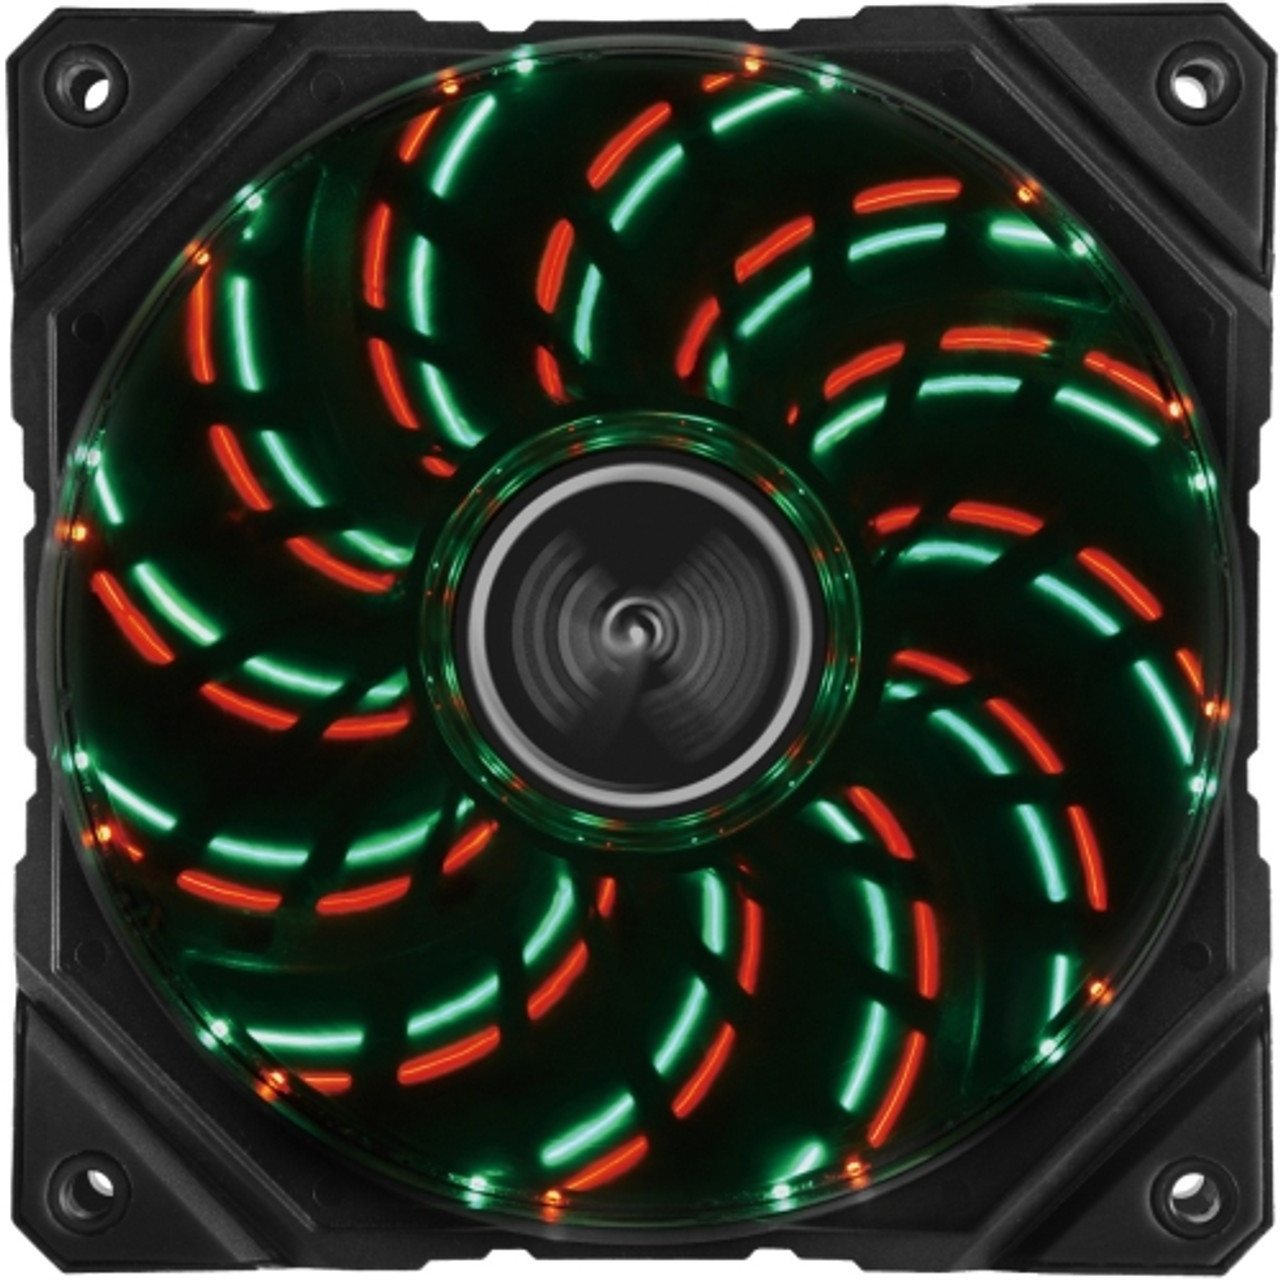 UCDFVD12P Enermax D.F.VEGAS DUO Cooling Fan 120 mm 1500 rpm61.9 CFM 22 dB(A) Noise 4-pin, 4-pin PWM, Fan Power Adapter Red, Green LED